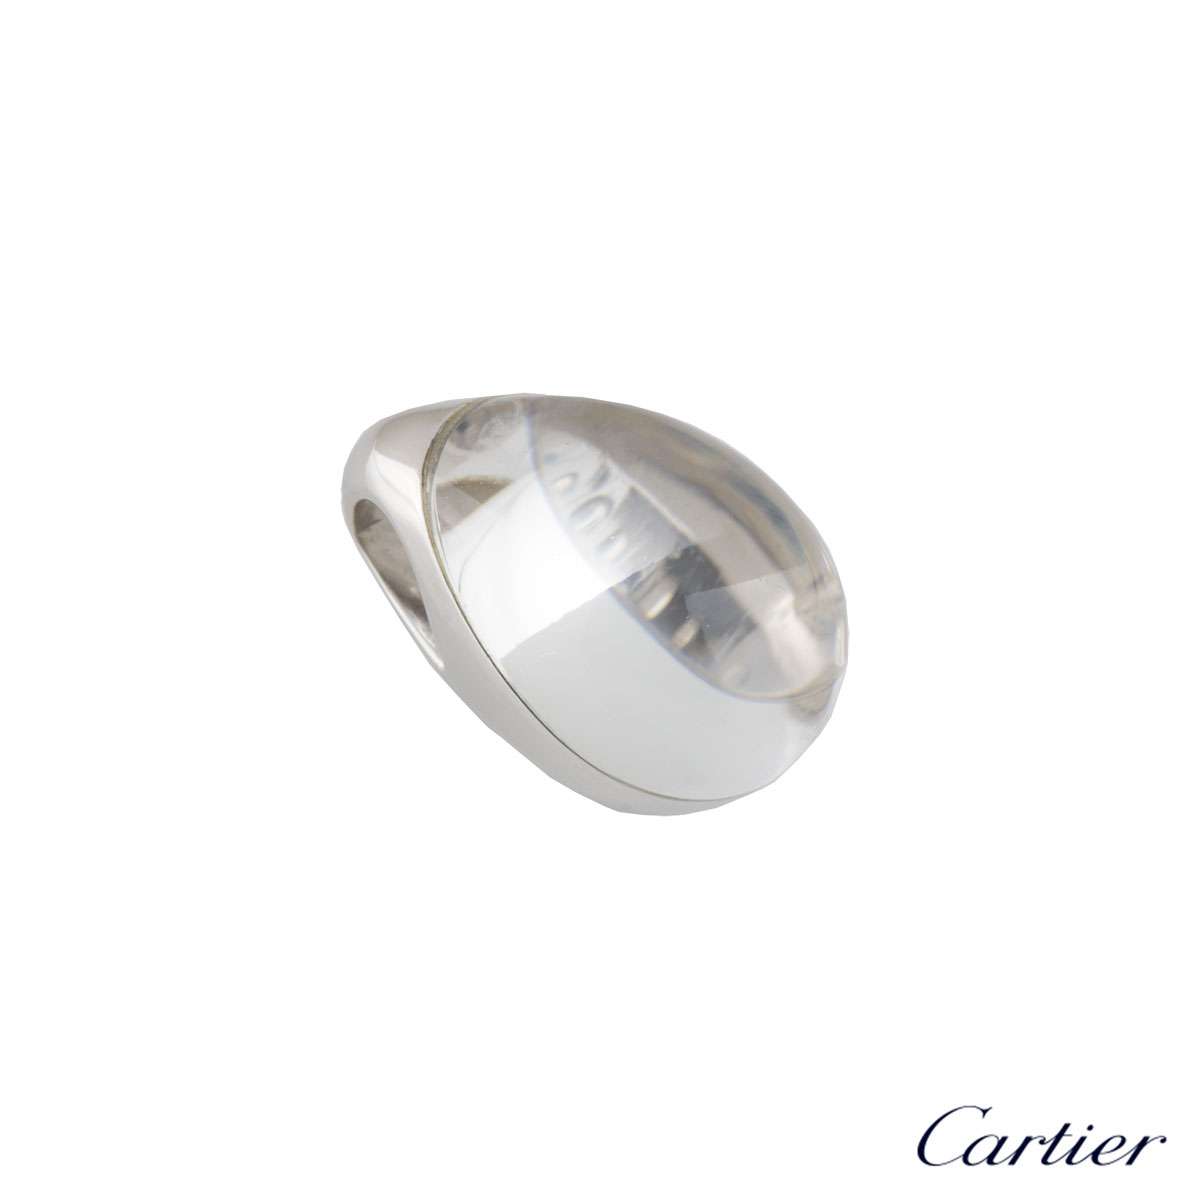 cartier myst diamond pendant